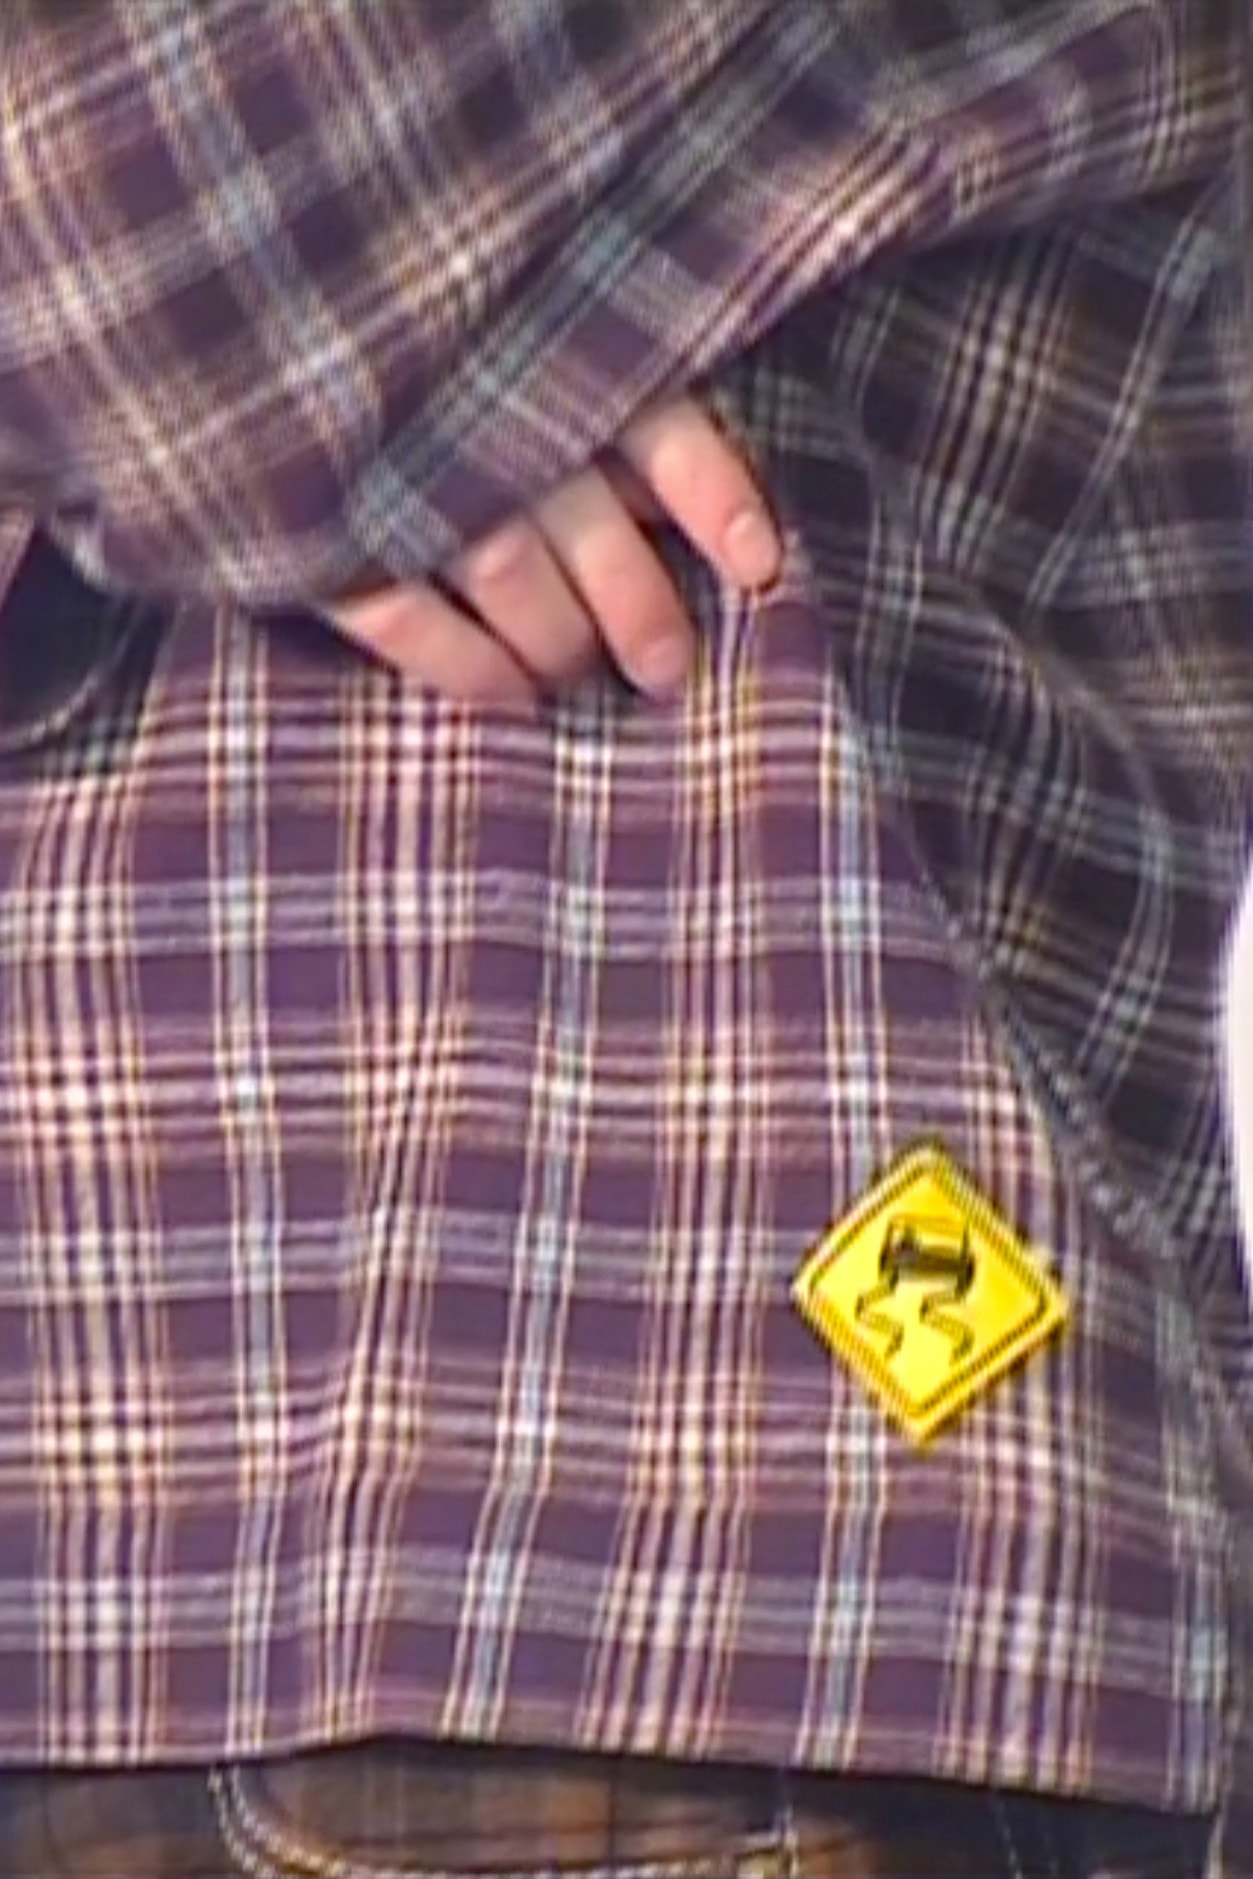 Opening Ceremony Skidz brand 1980s 80s clothing plaid pants baggy yellow car logo skidmark will smith fresh prince